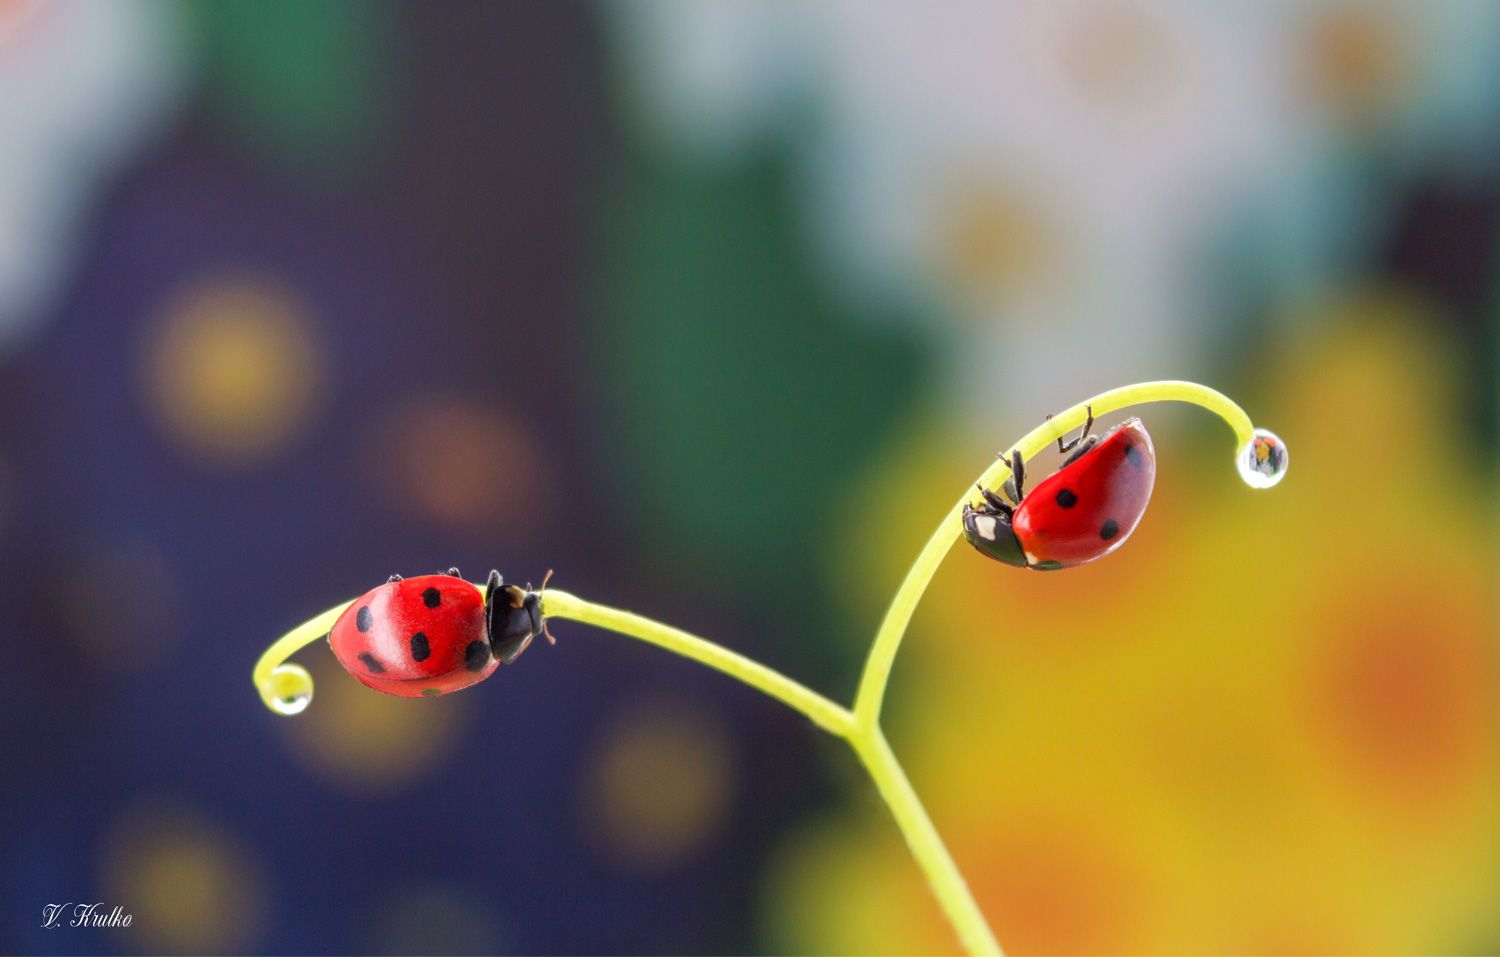 #ladybug #insect #macro #nature #wildlife #wallpaper #background #print, Вікторія Крулько